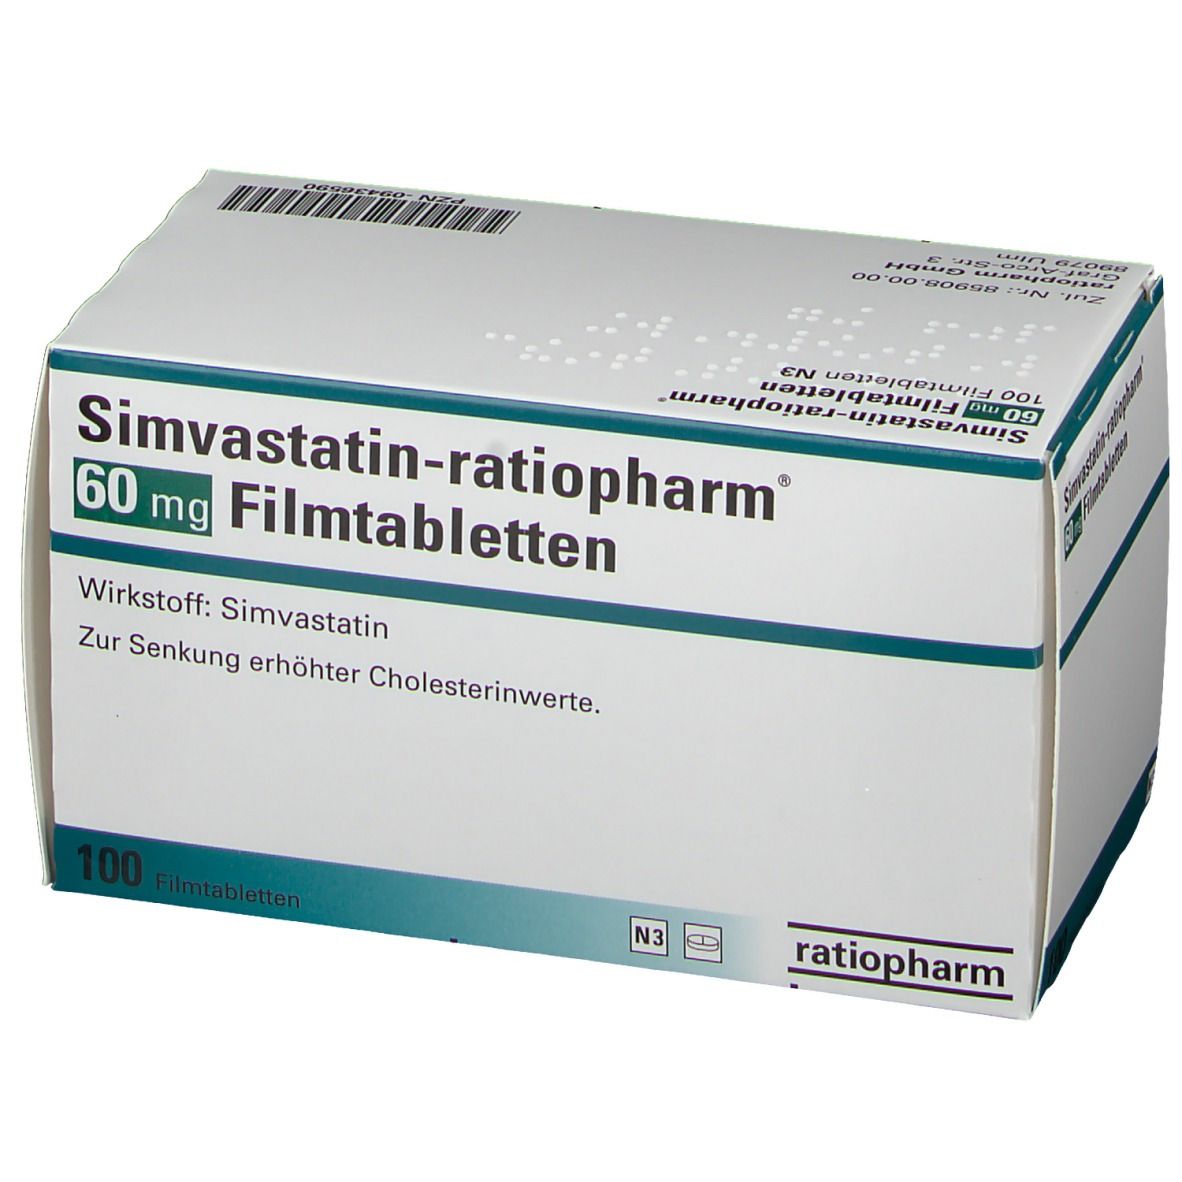 Simvastatin-ratiopharm® 60 mg